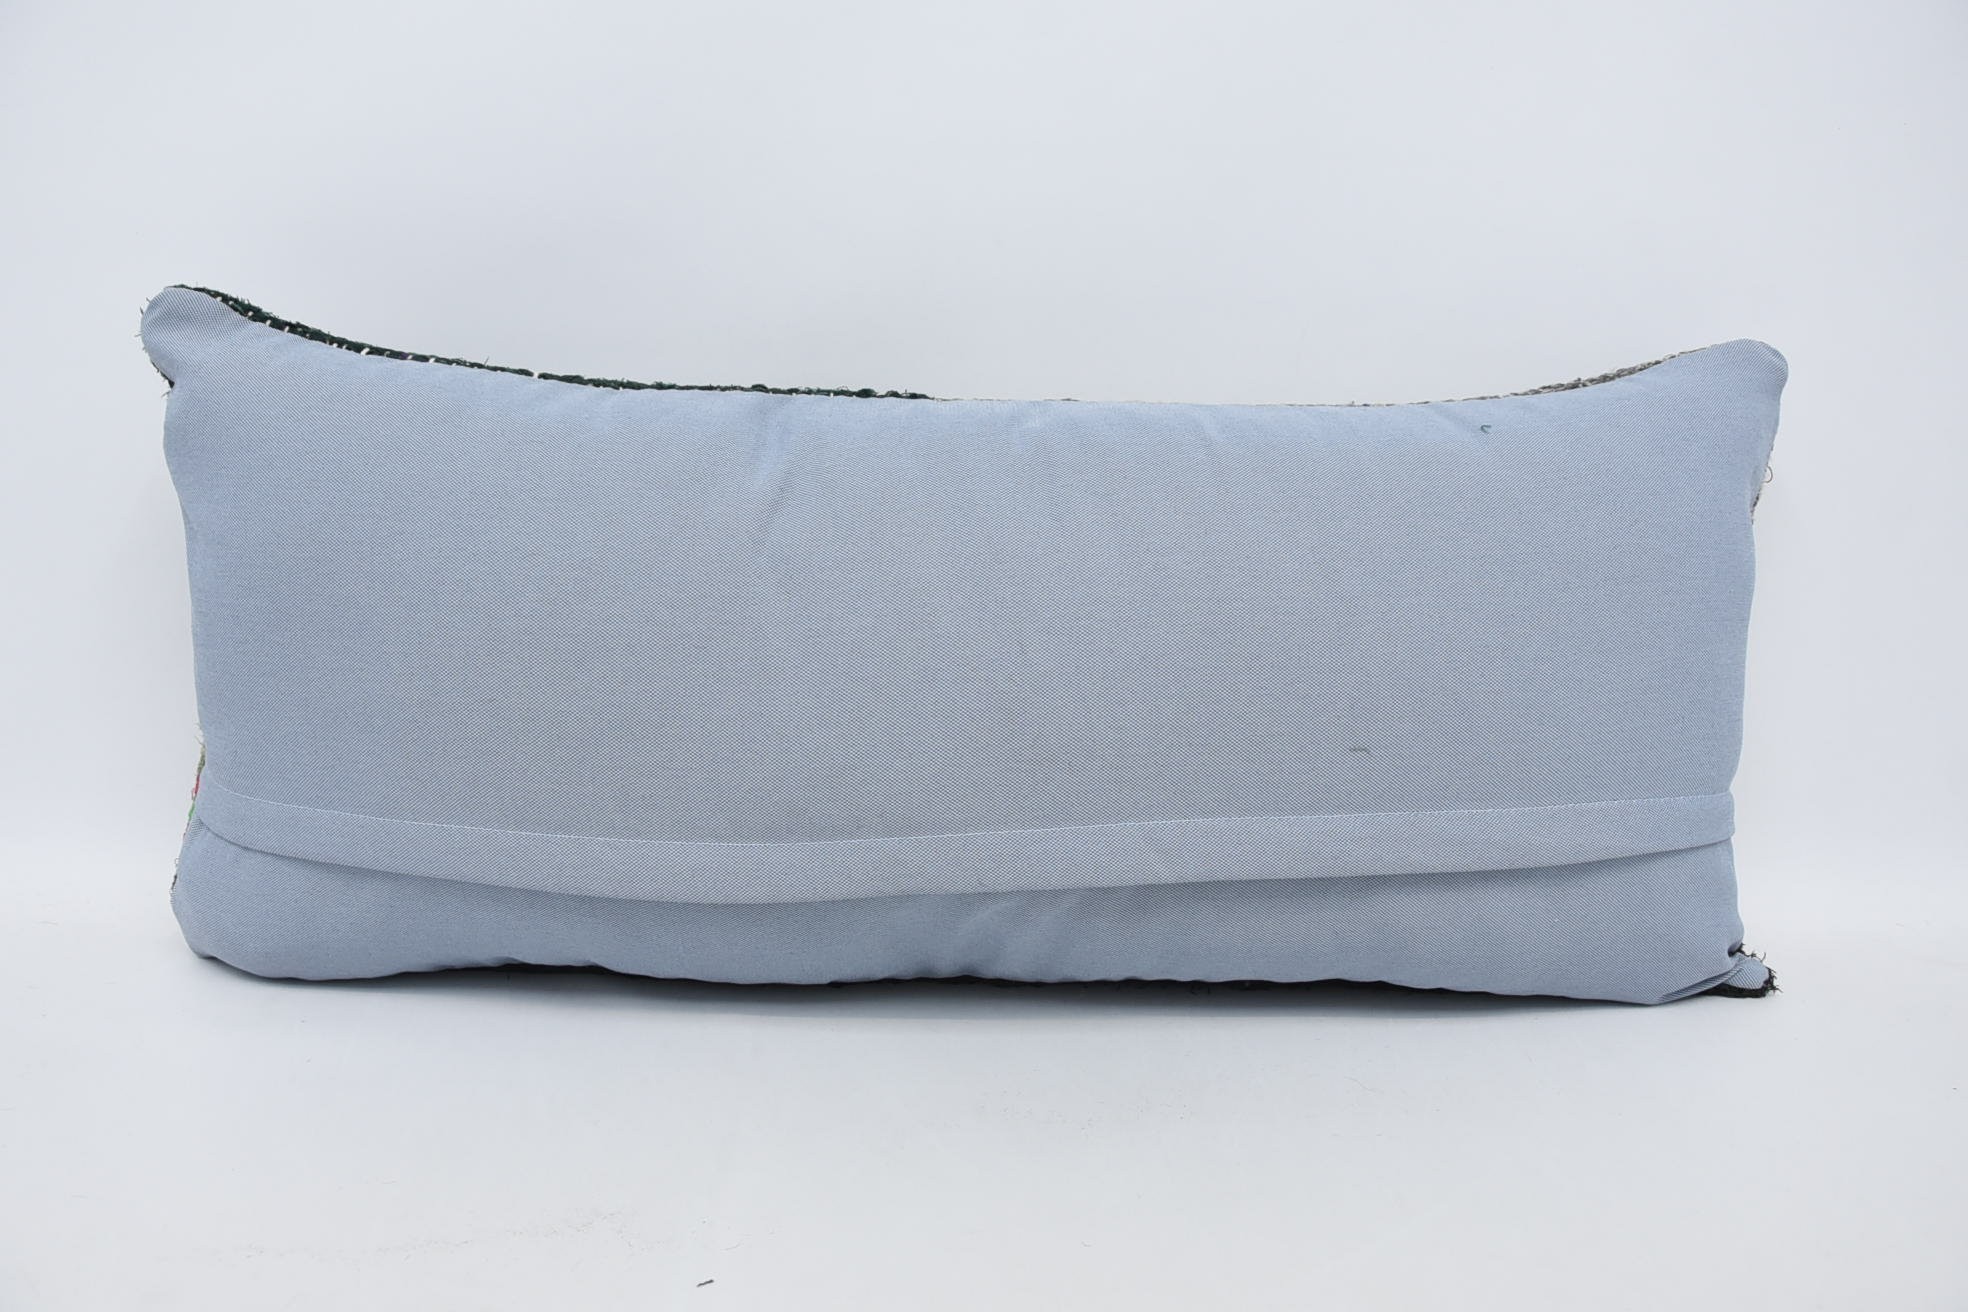 Pillow for Sofa, 16"x36" Green Cushion Cover, Gift Pillow, Turkish Kilim Pillow, Art Deco Pillow Cover, Ottoman Pillow Sham